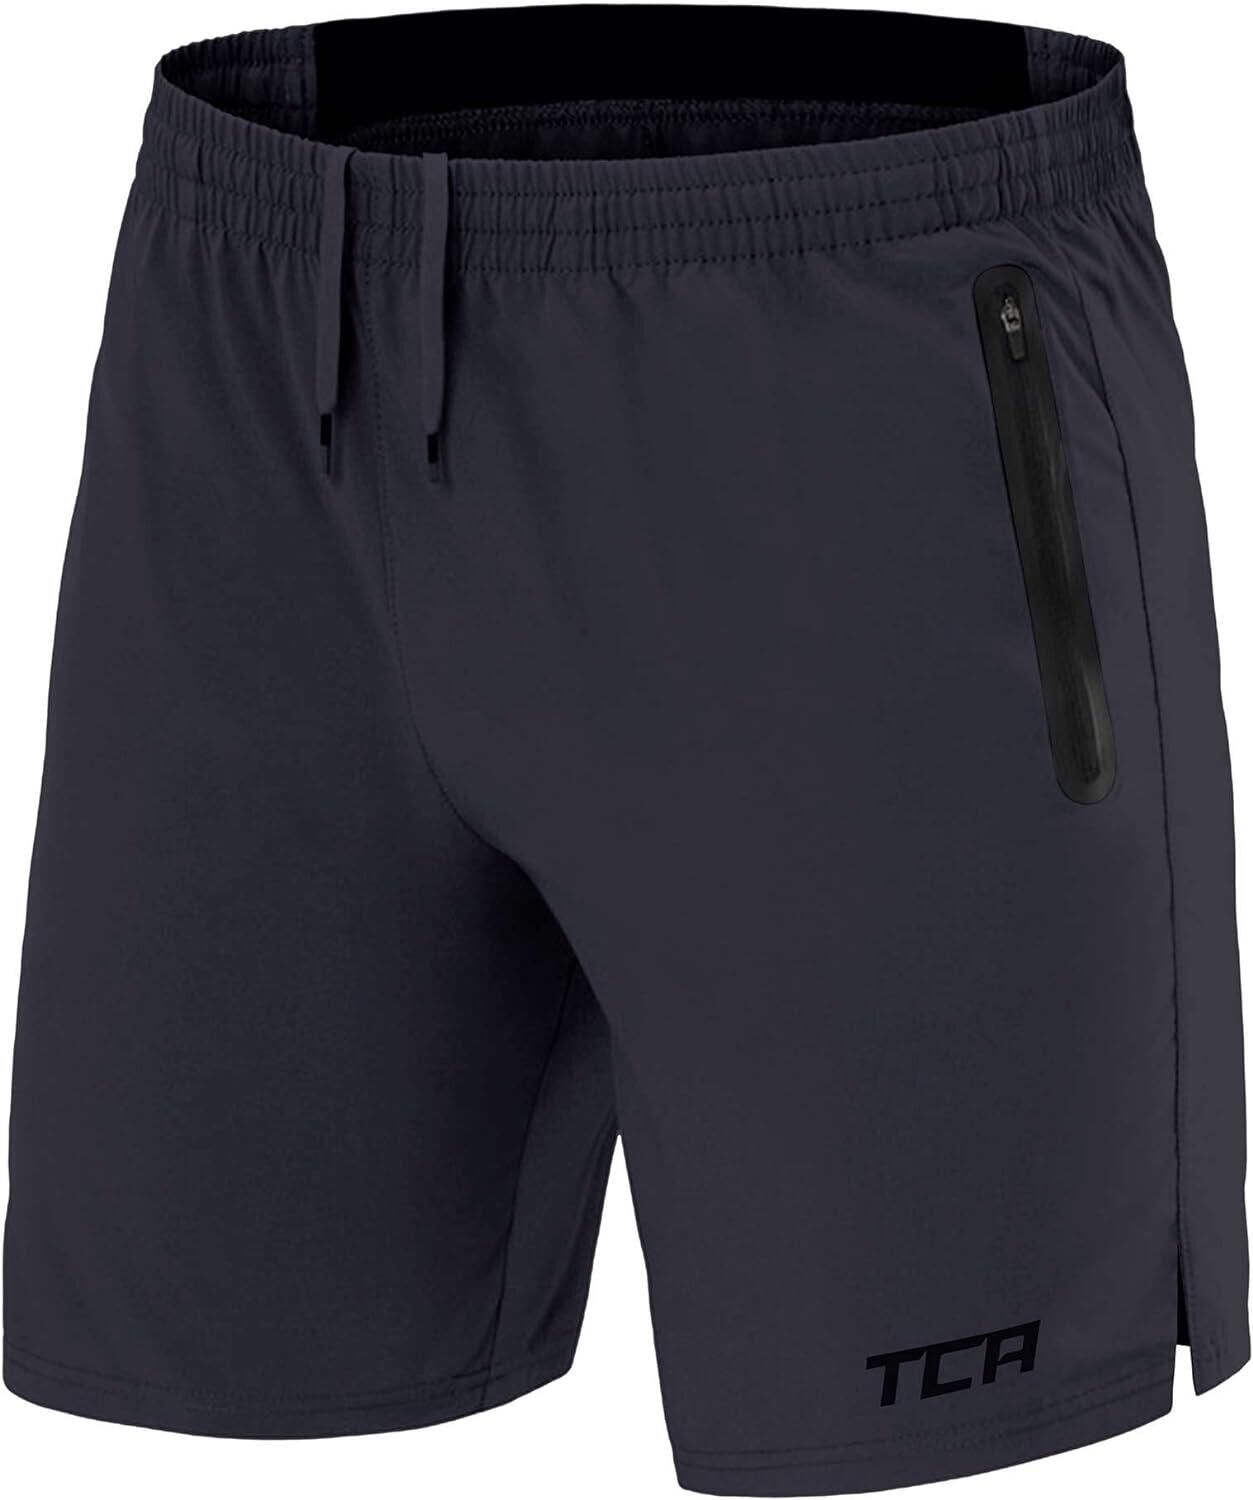 TCA Men's Elite Tech Lightweight Running Shorts with Zip Pockets - Smoke Grey